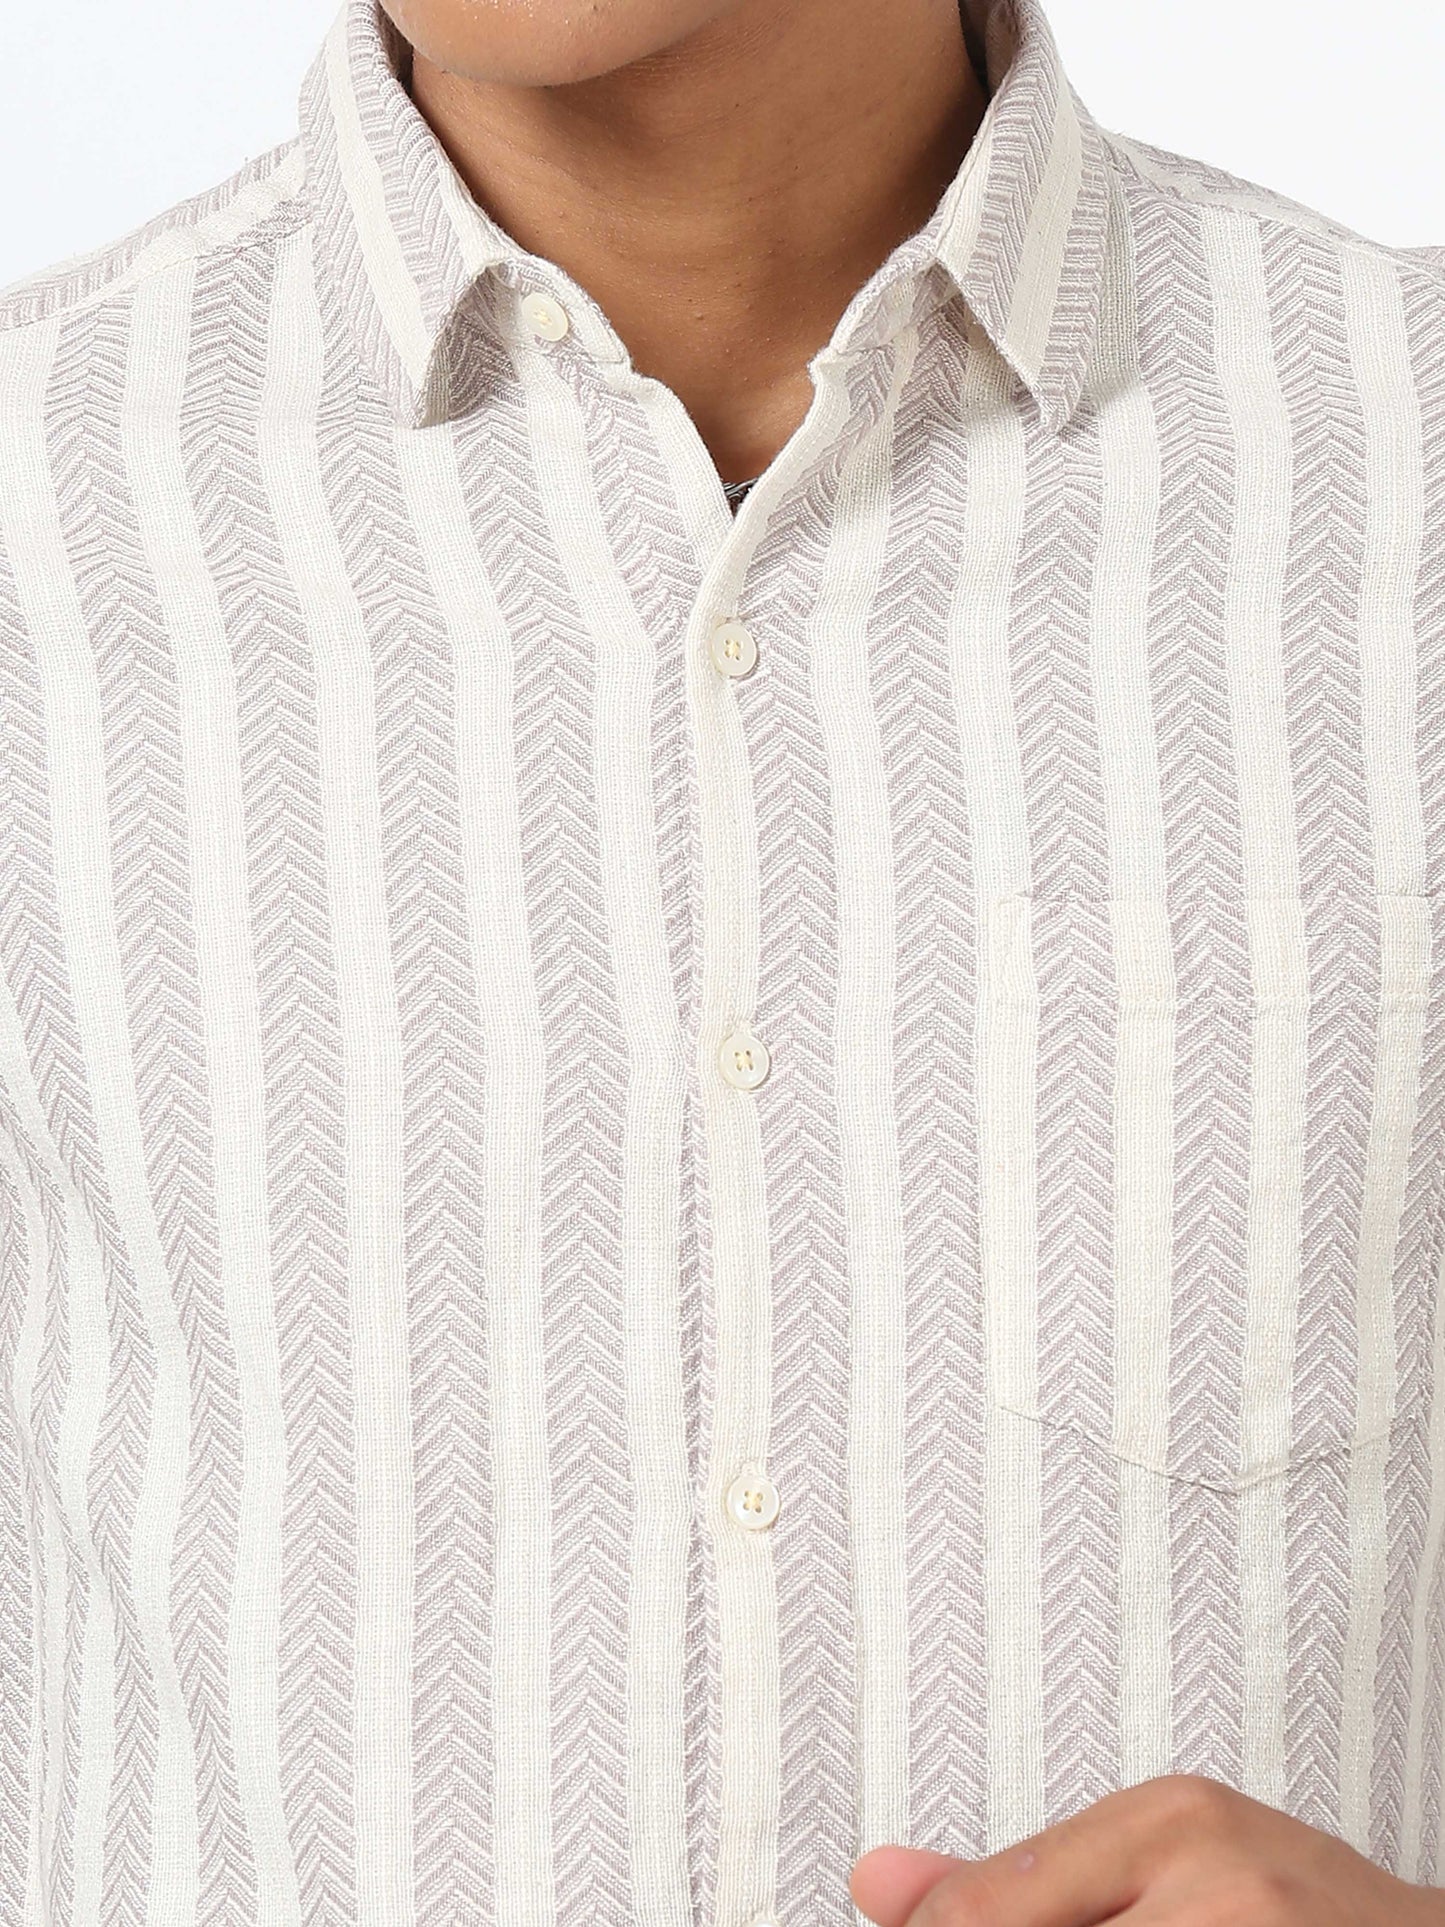 Martini Arrow Half Sleeve Vertical Striped Shirt